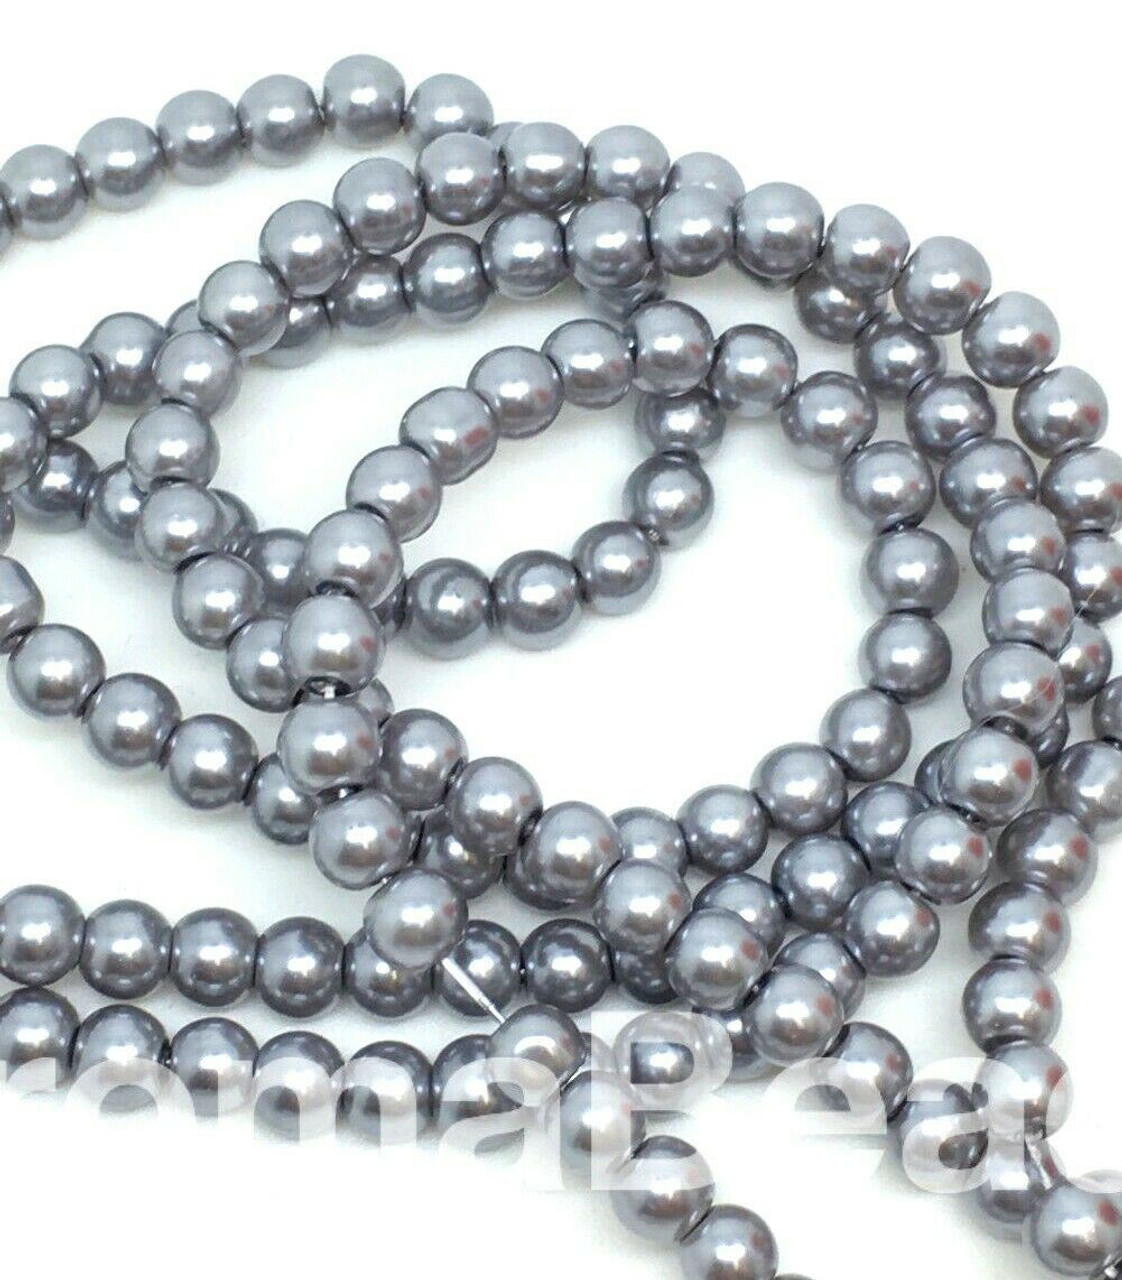 Steel Grey 4mm Glass Pearls